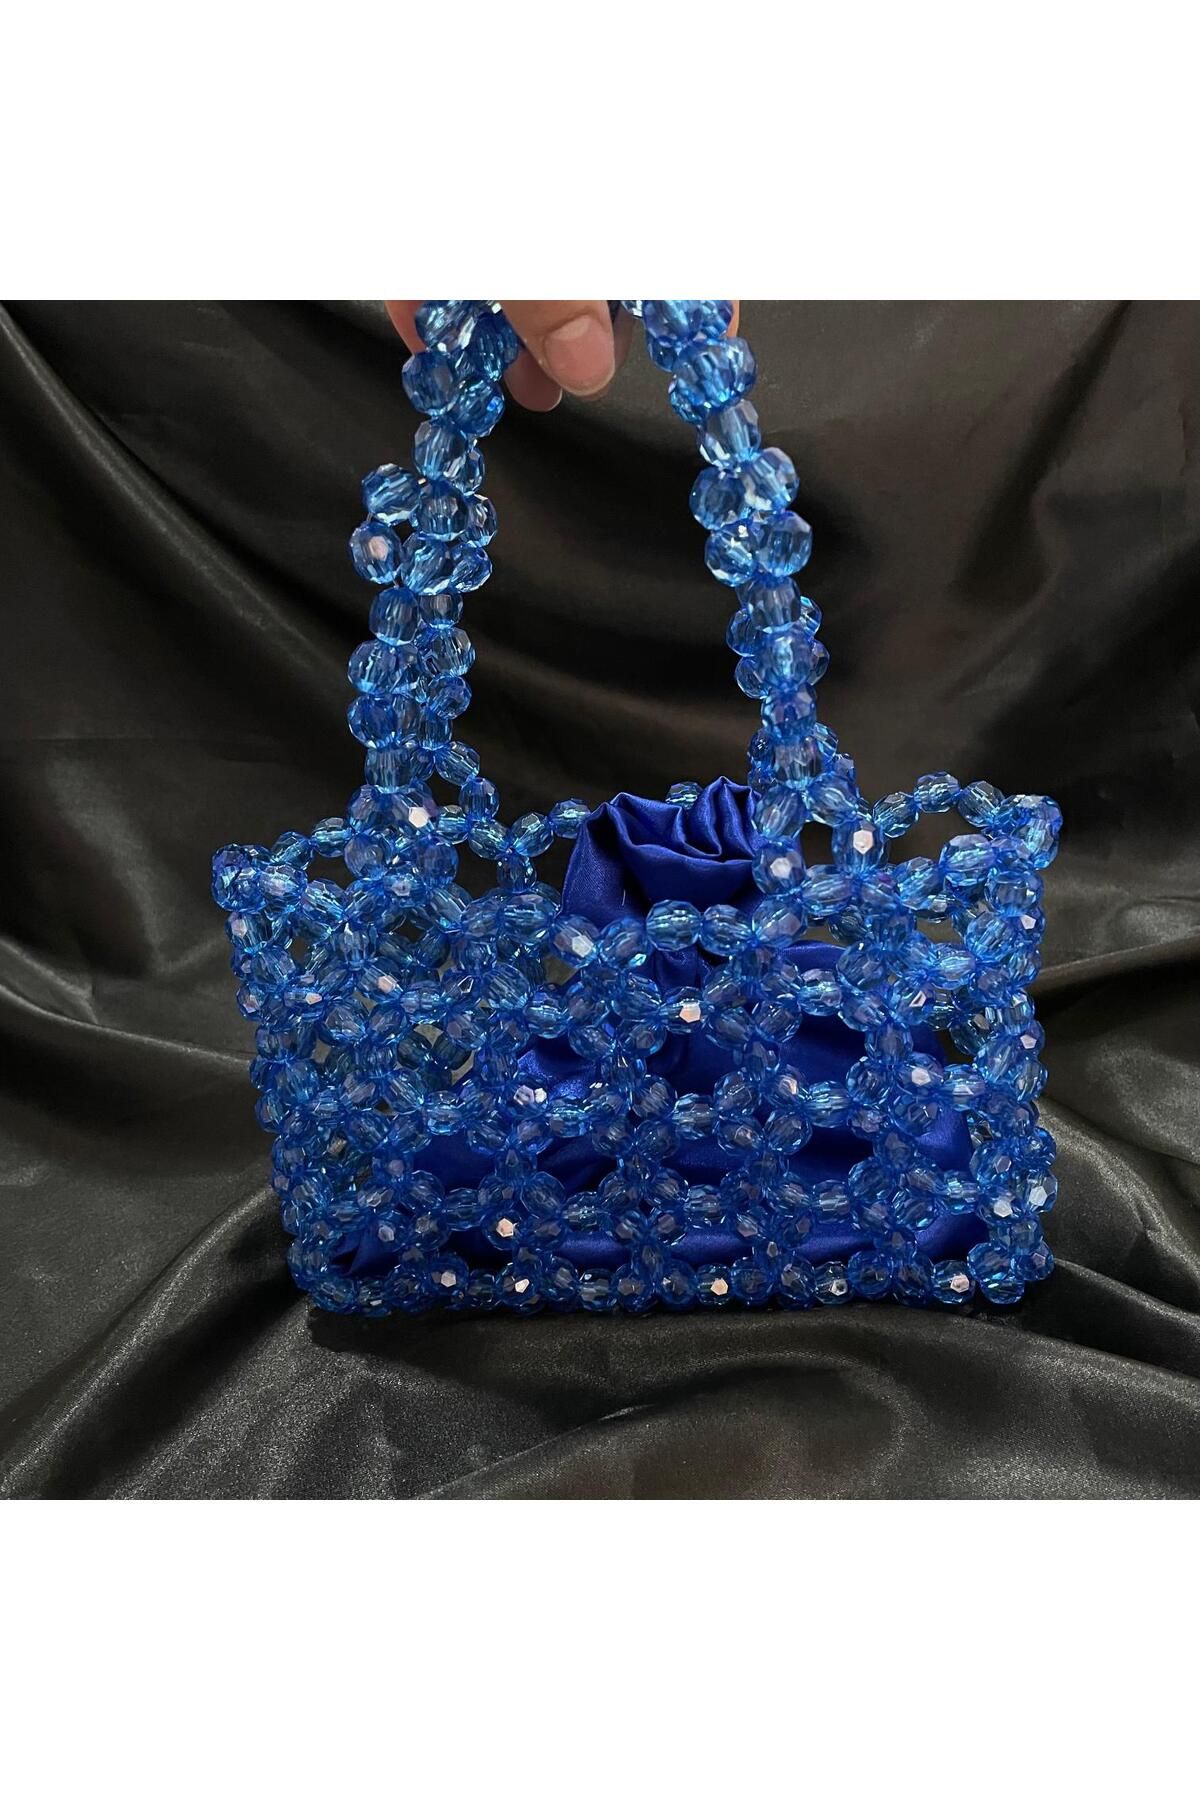 sirius art design Mavi kristal boncuk çanta